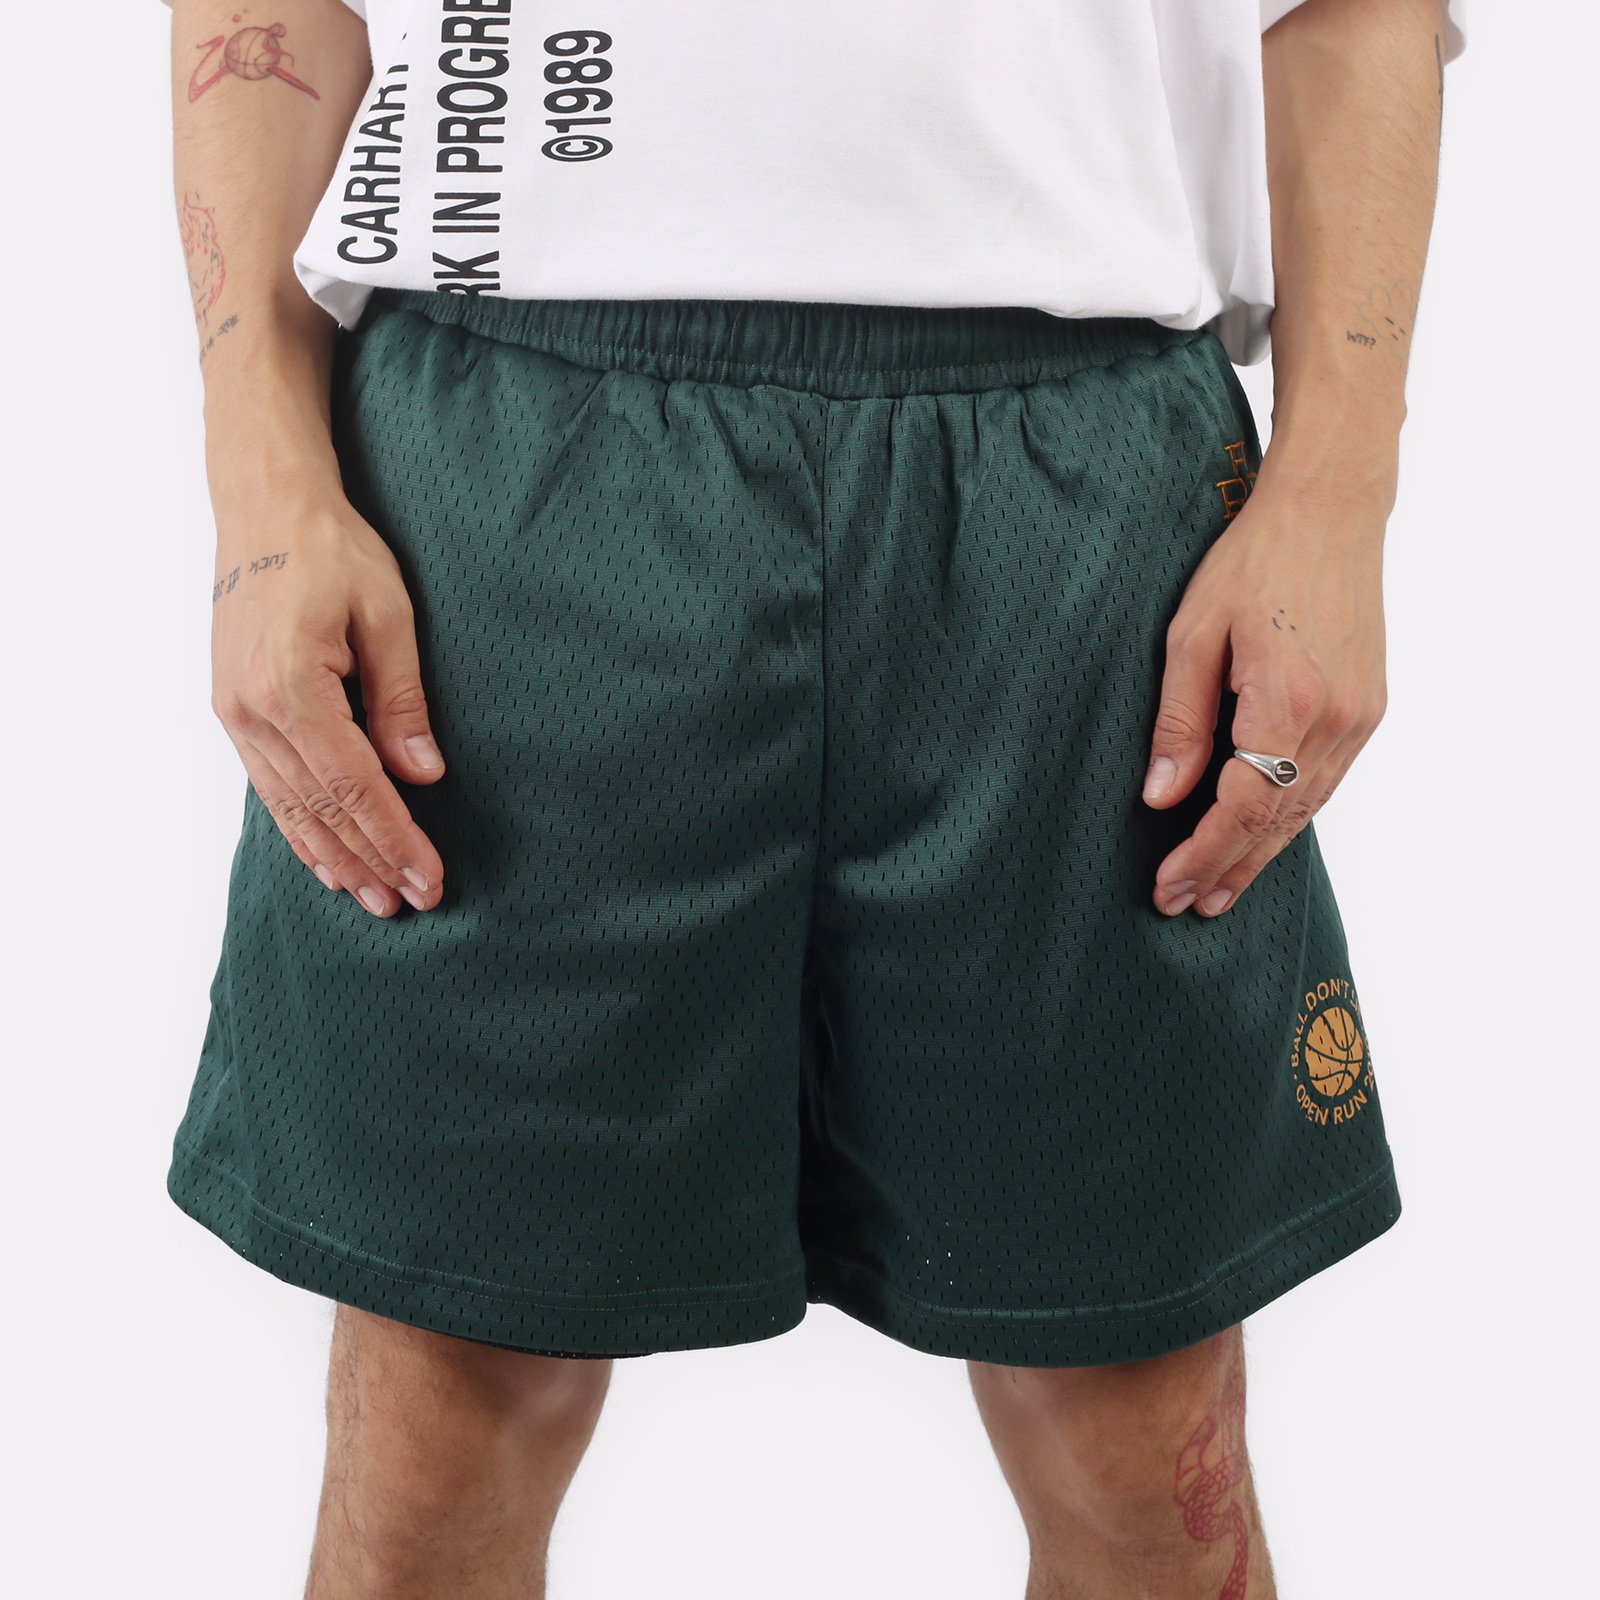 мужские зеленые шорты  Hard Open Run Open run-grn/gold - цена, описание, фото 2